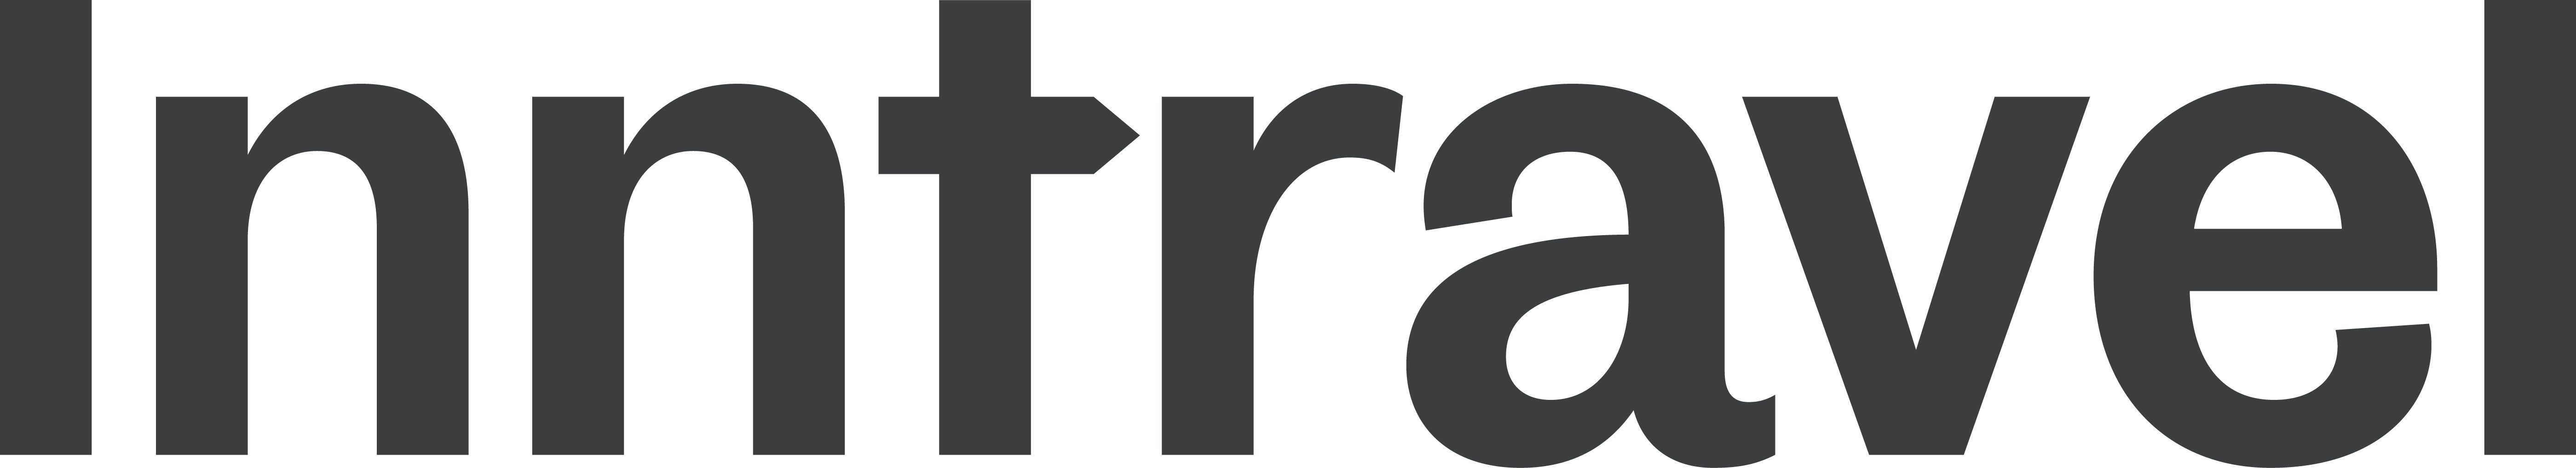 InnTravel logo